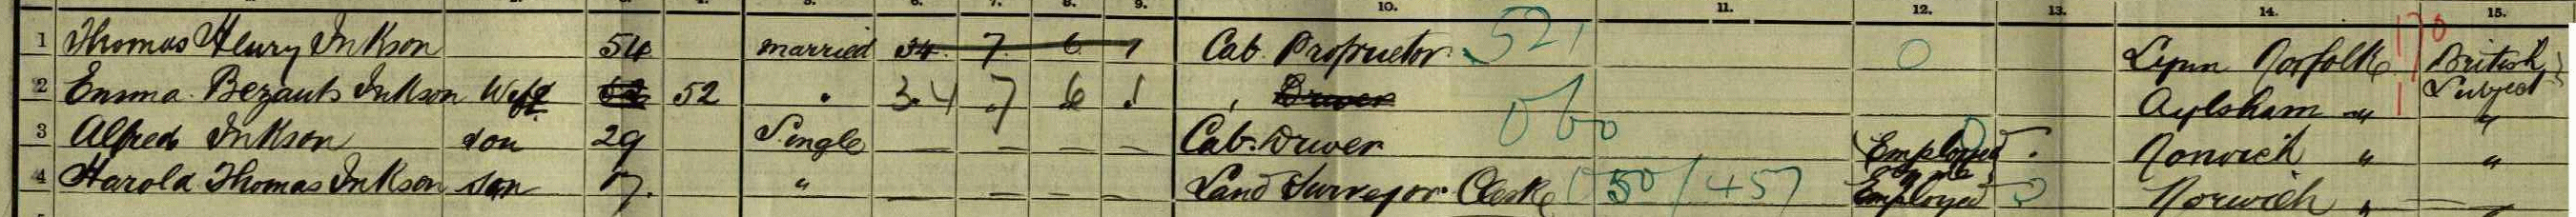 thomas henry 1911 census